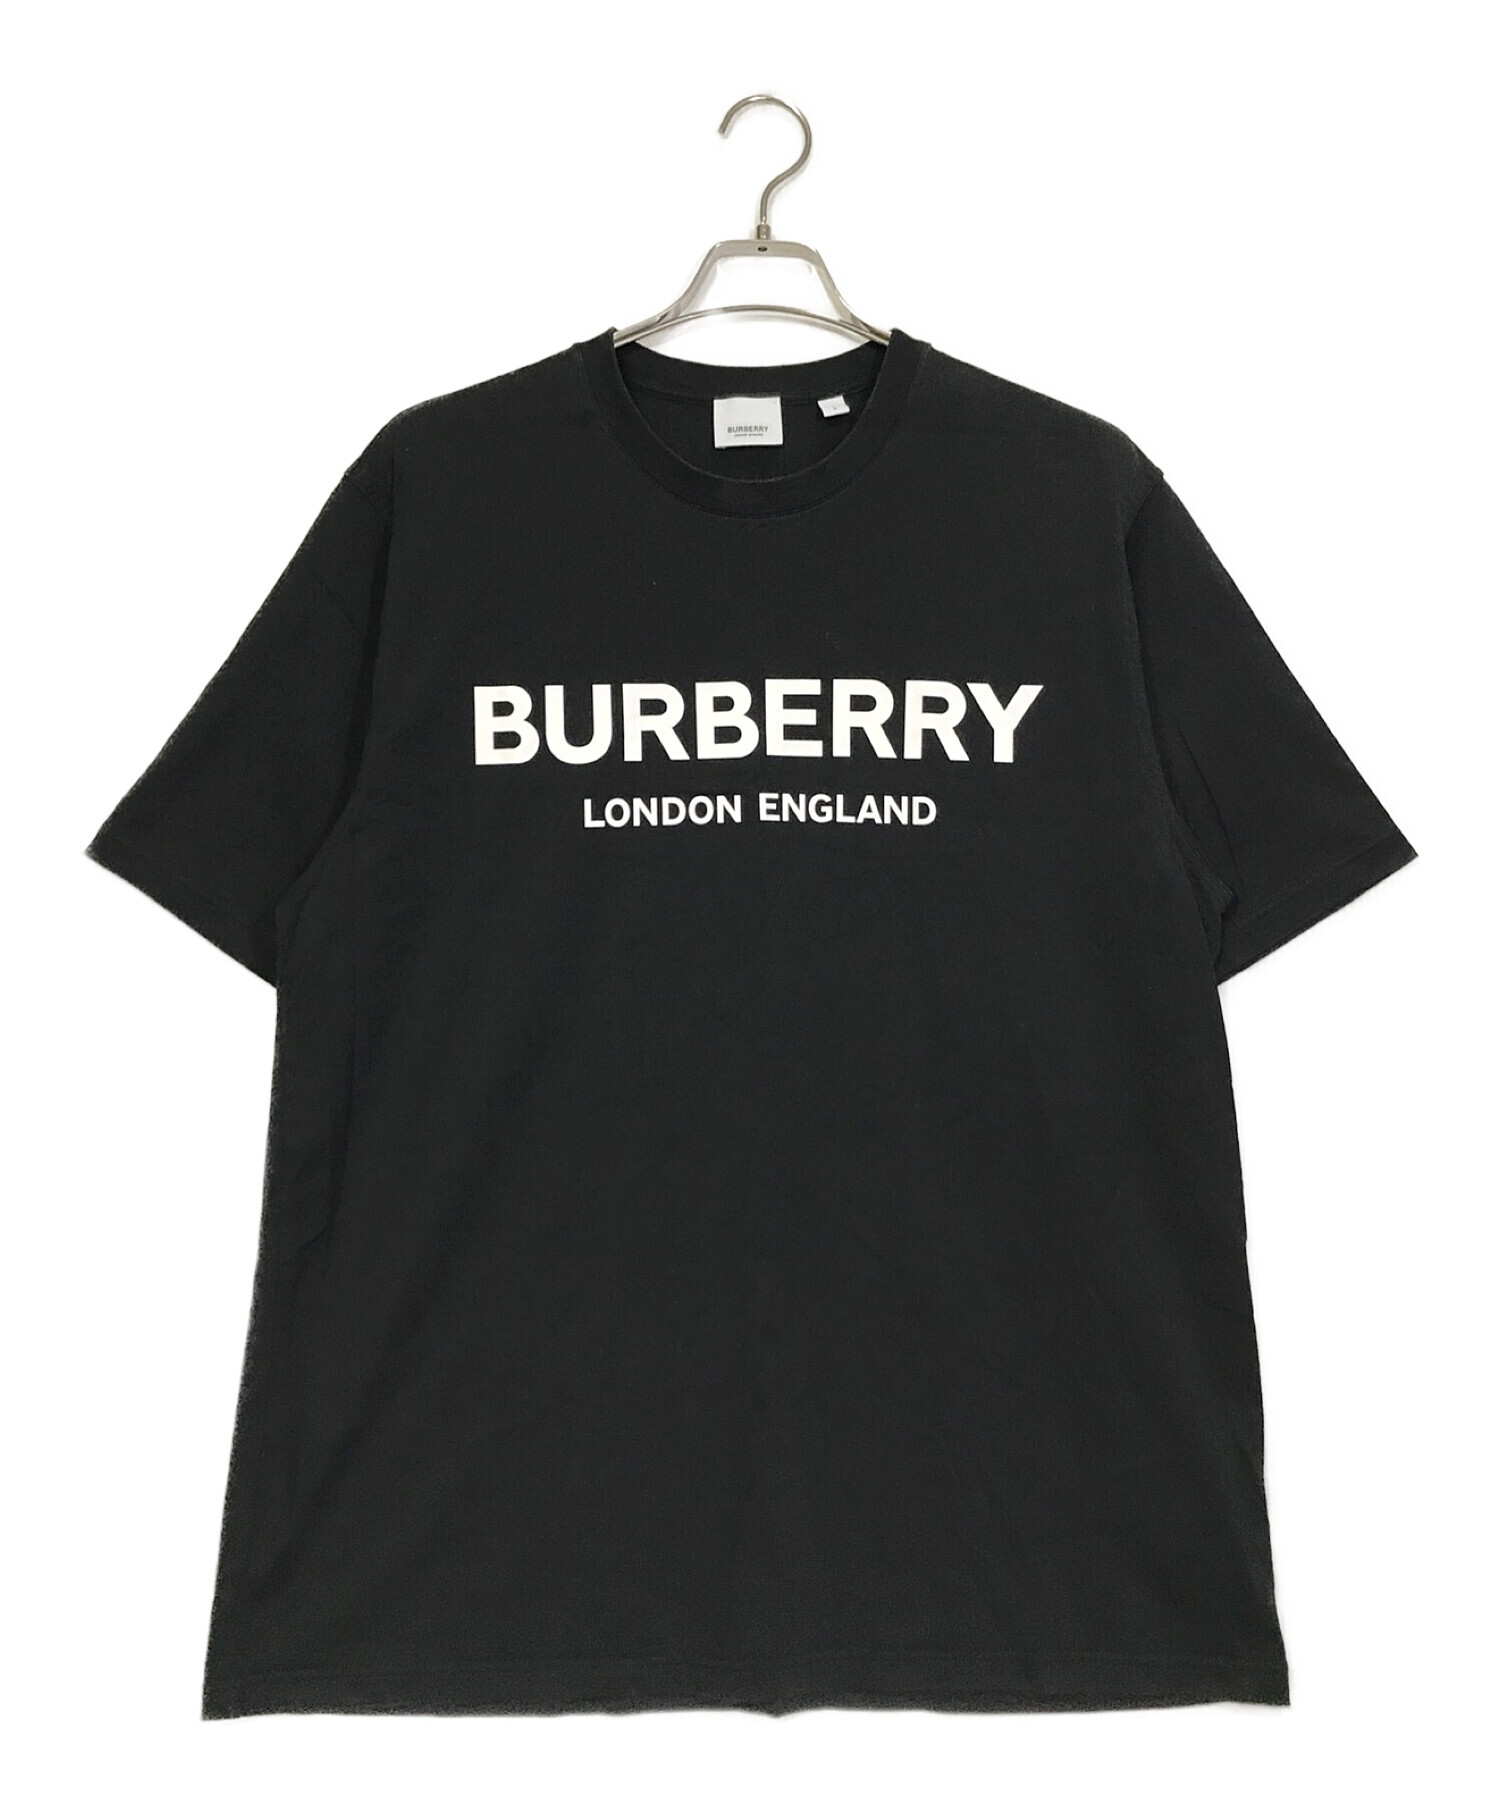 BURBERRY LONDON ENGLAND ロゴ クルーネック Tシャツ-